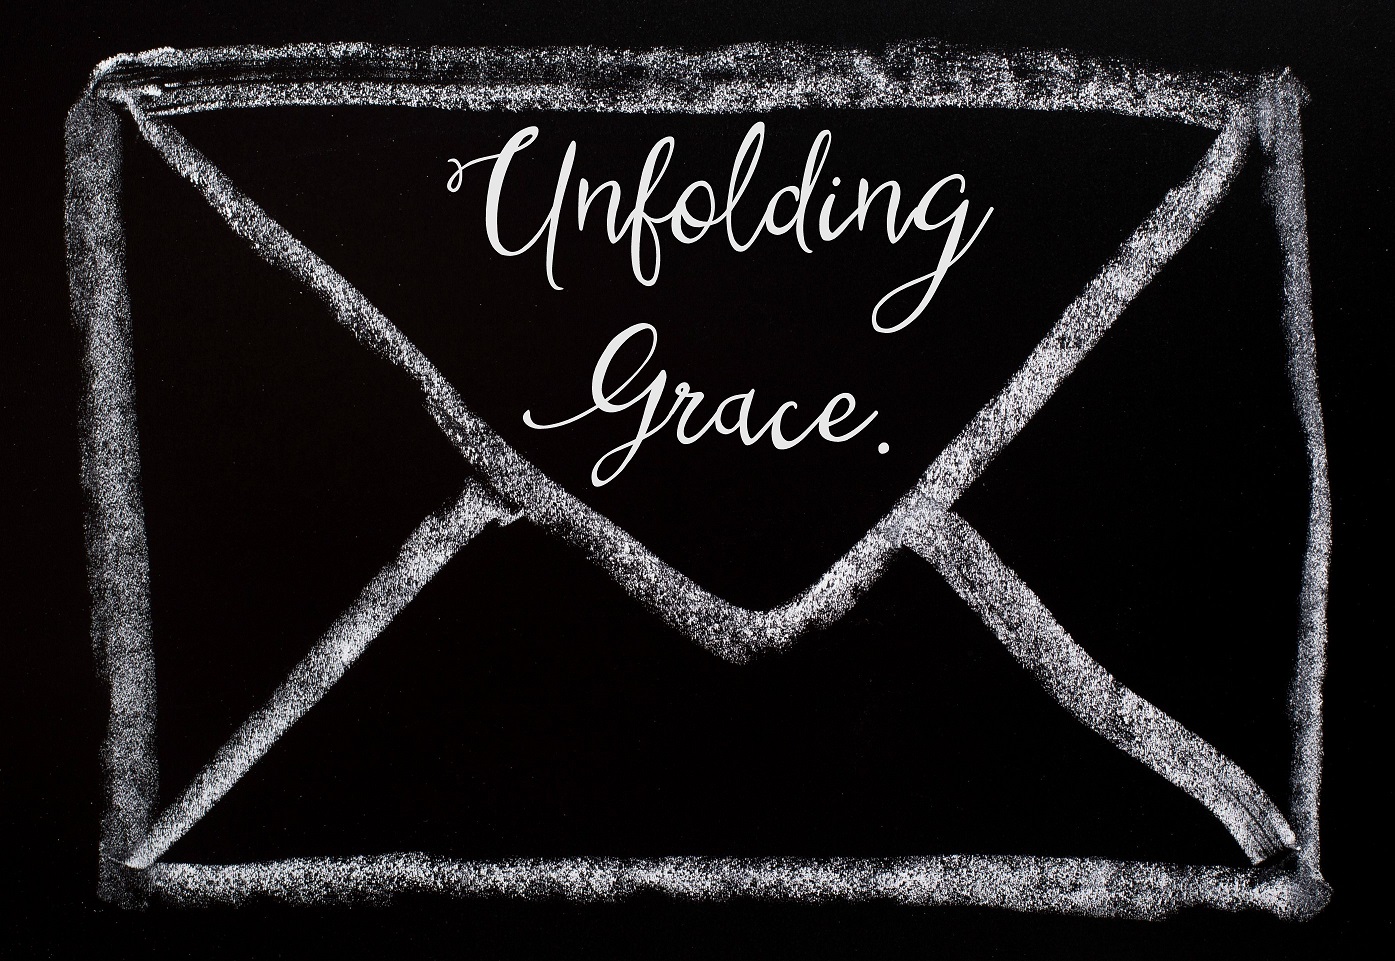 Unfolding grace